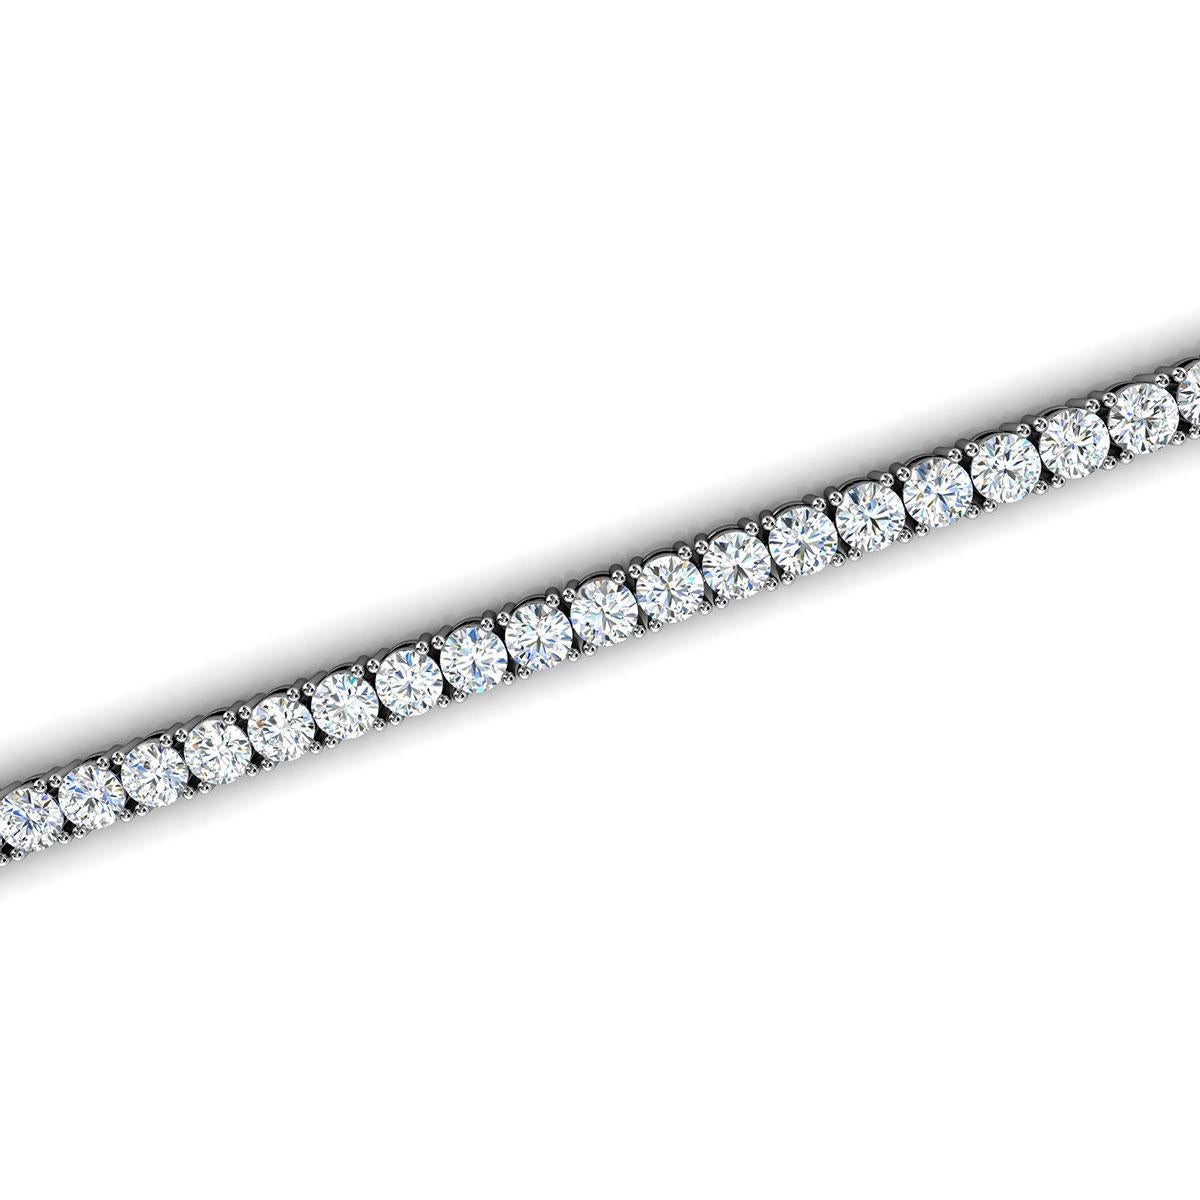 7 carat tennis bracelet